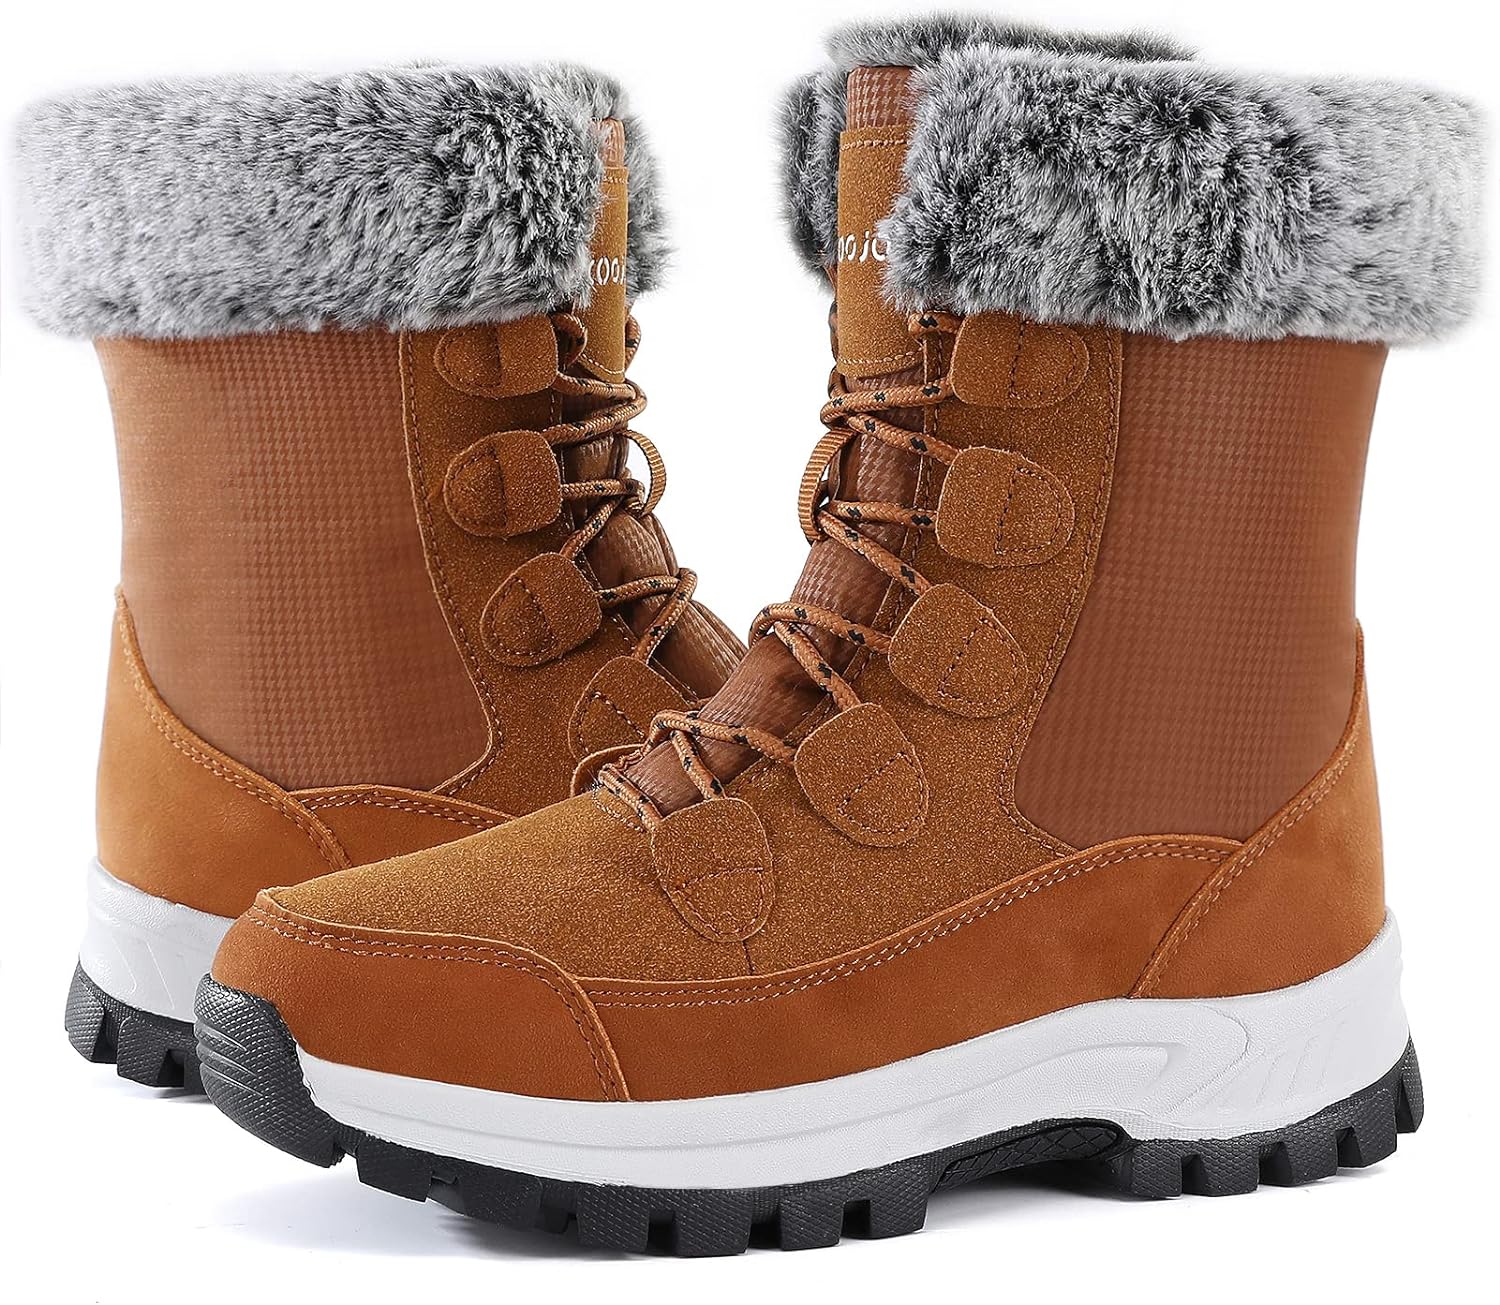 COOJOY Womens Winter Snow Boots Waterproof Shoes Walking